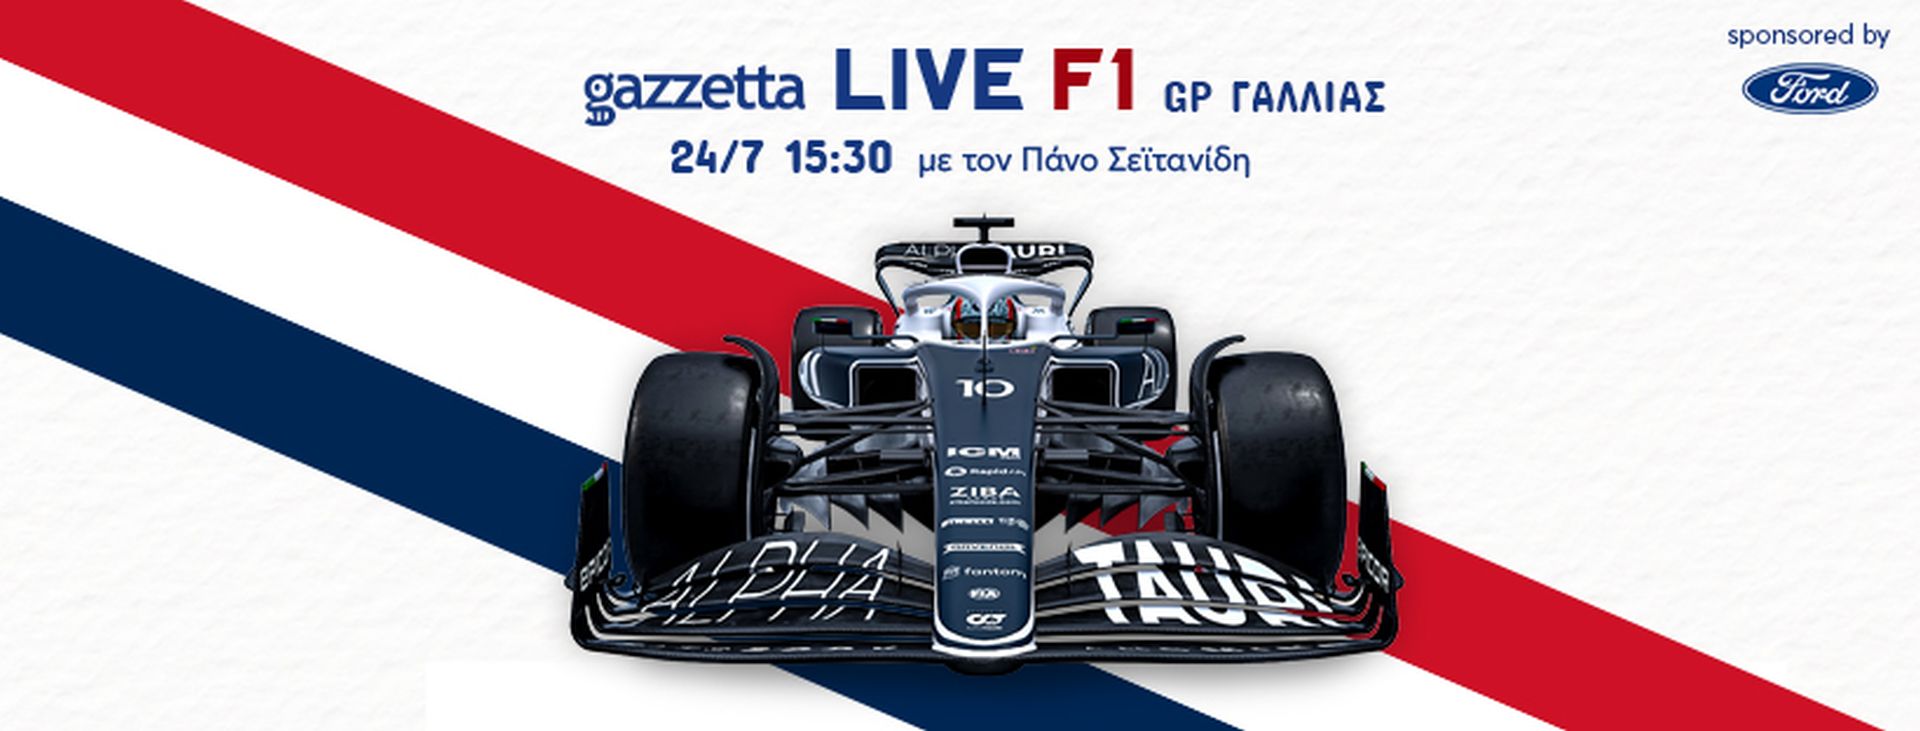 Gazzetta LIVE, GP Γαλλίας